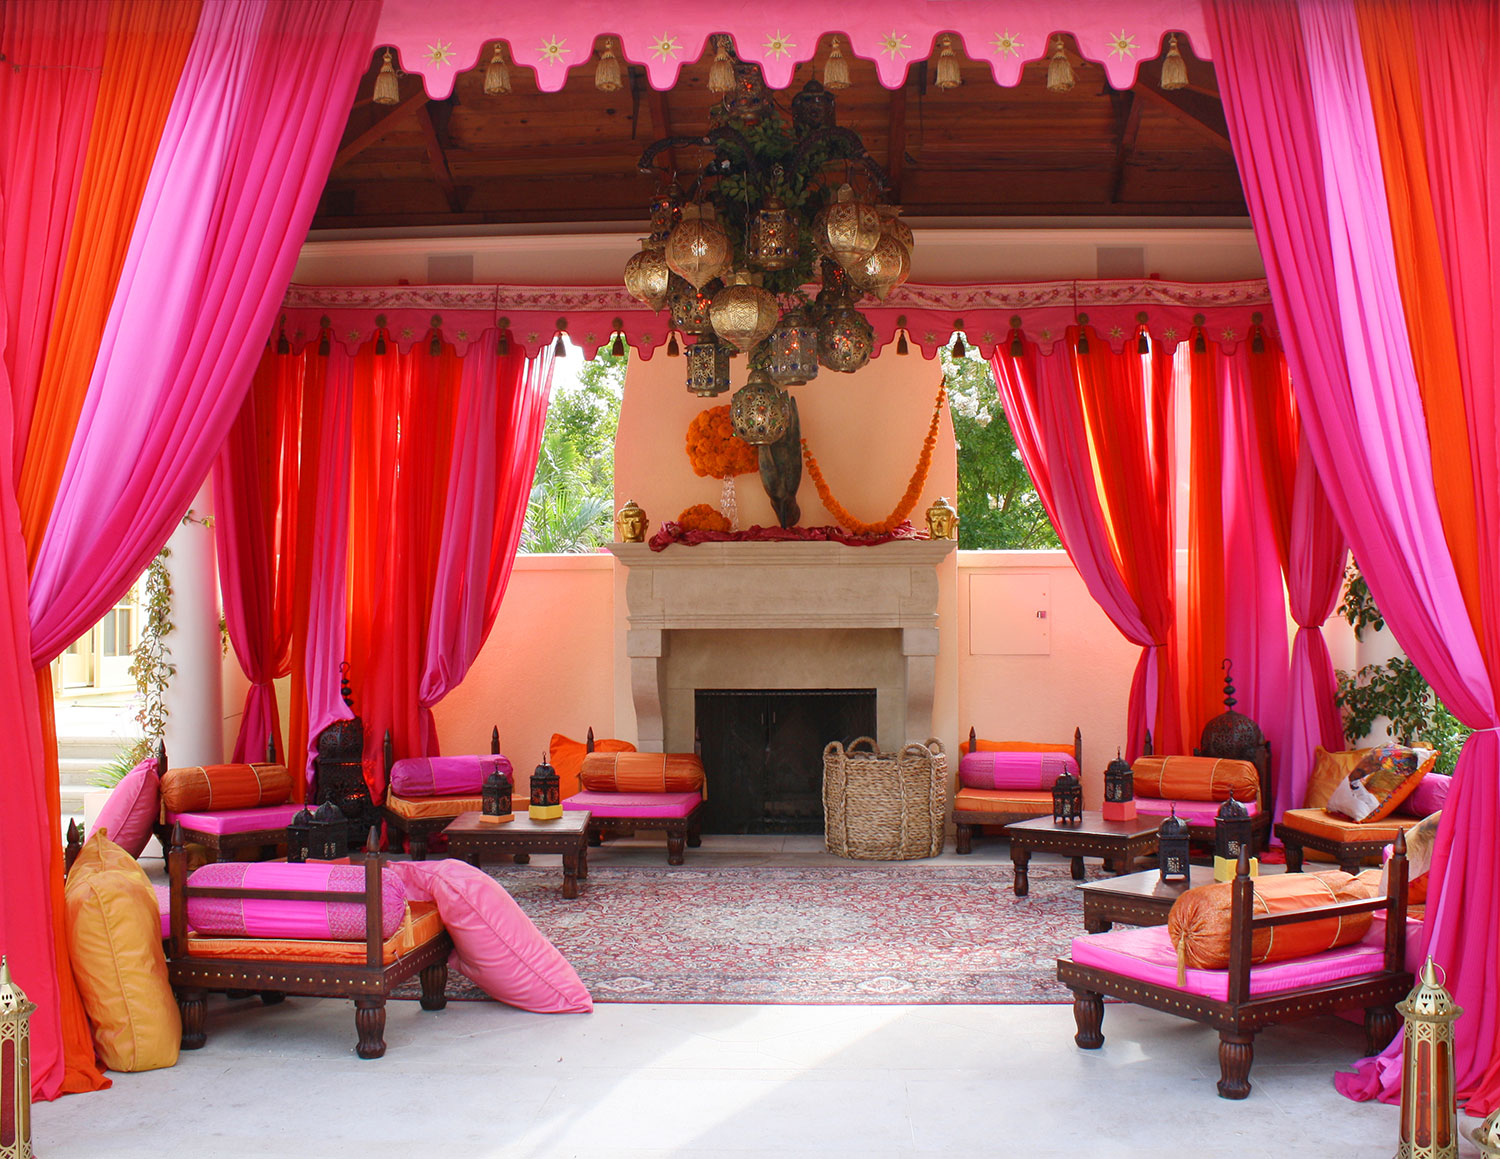 raj-tents-furniture-hot-pink-lounge.jpg